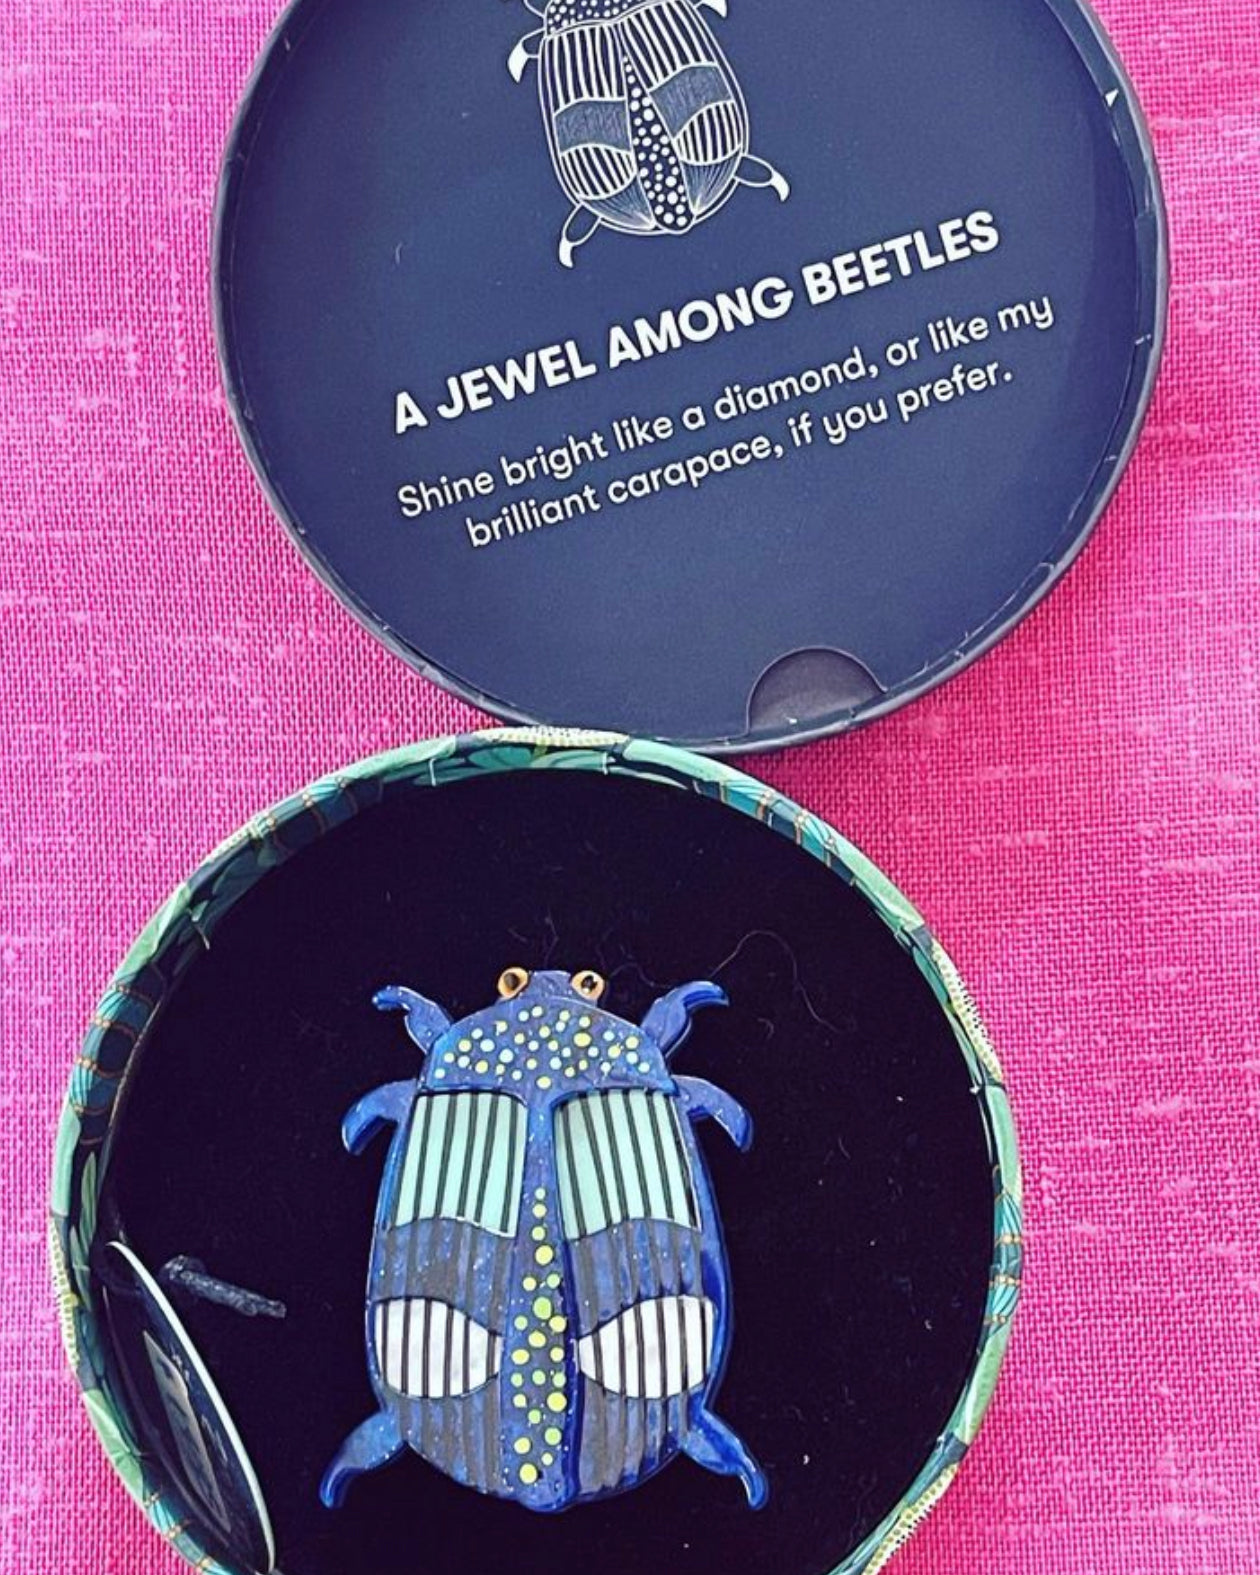 Jewel among Beetles brooch by Erstwilder